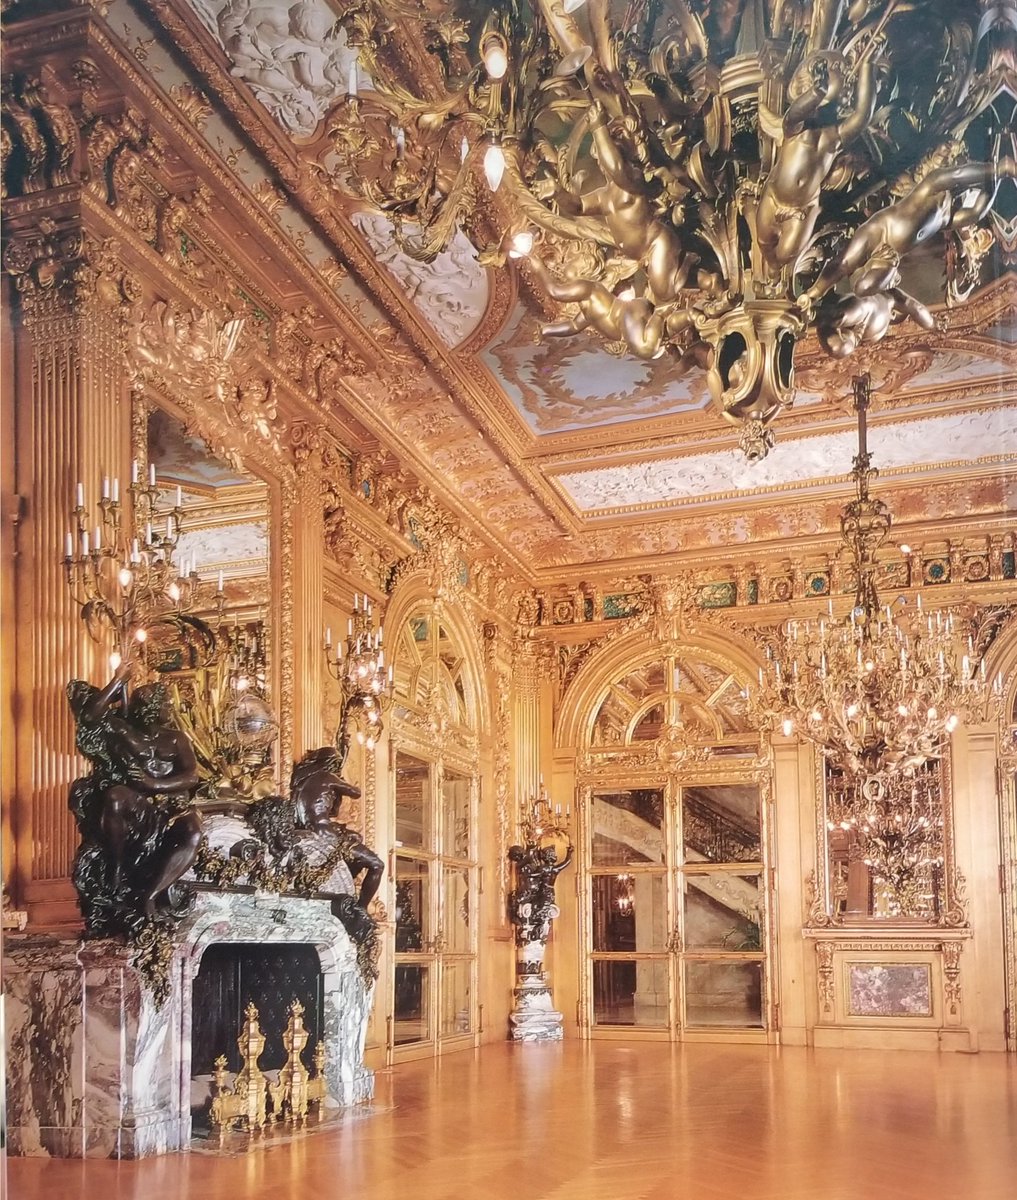 The Vanderbilt/Belmont Gold Room
Newport, Rhode Island #MarbleHouse